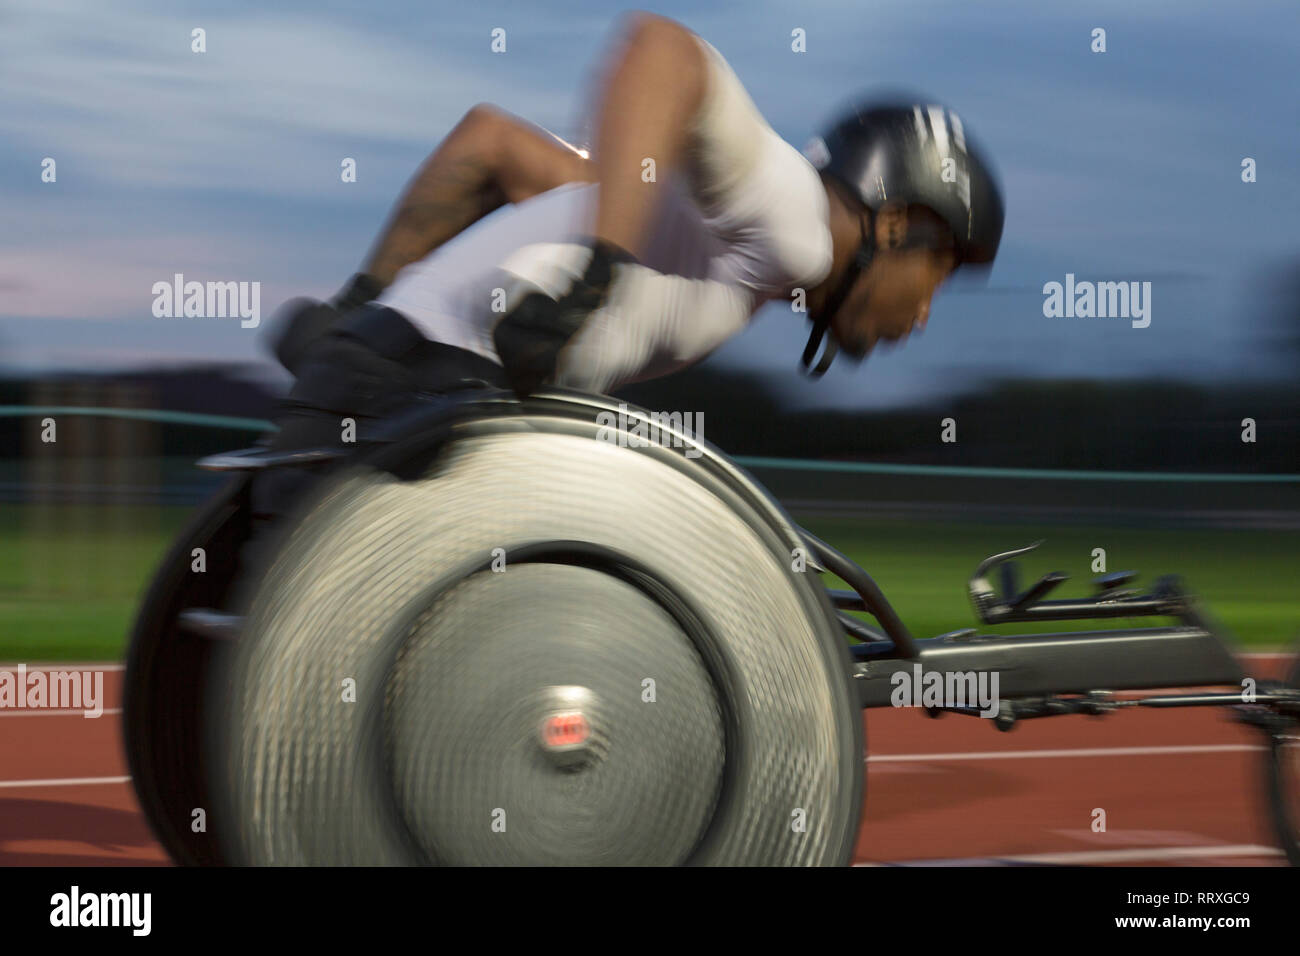 Paraplegic athlete speeding along sports track in wheelchair race Stock Photo